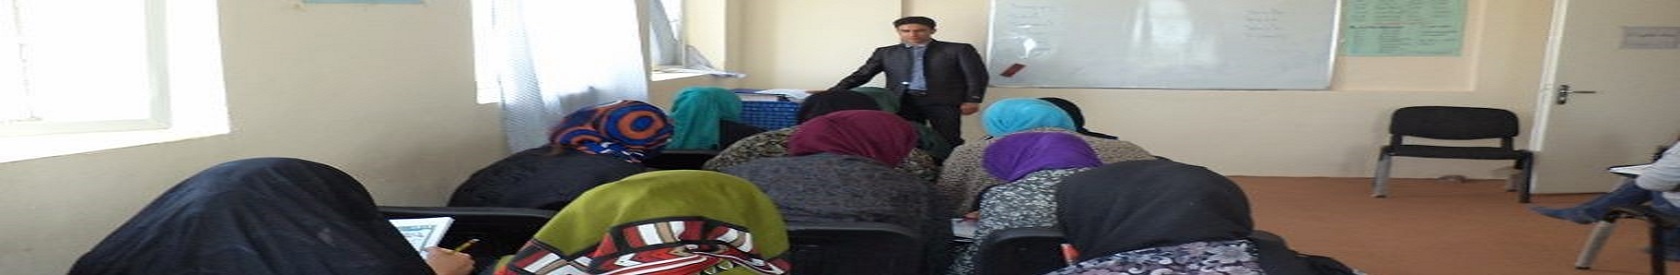 First group of Interchange-3- English classes at Herat Teacher Training College